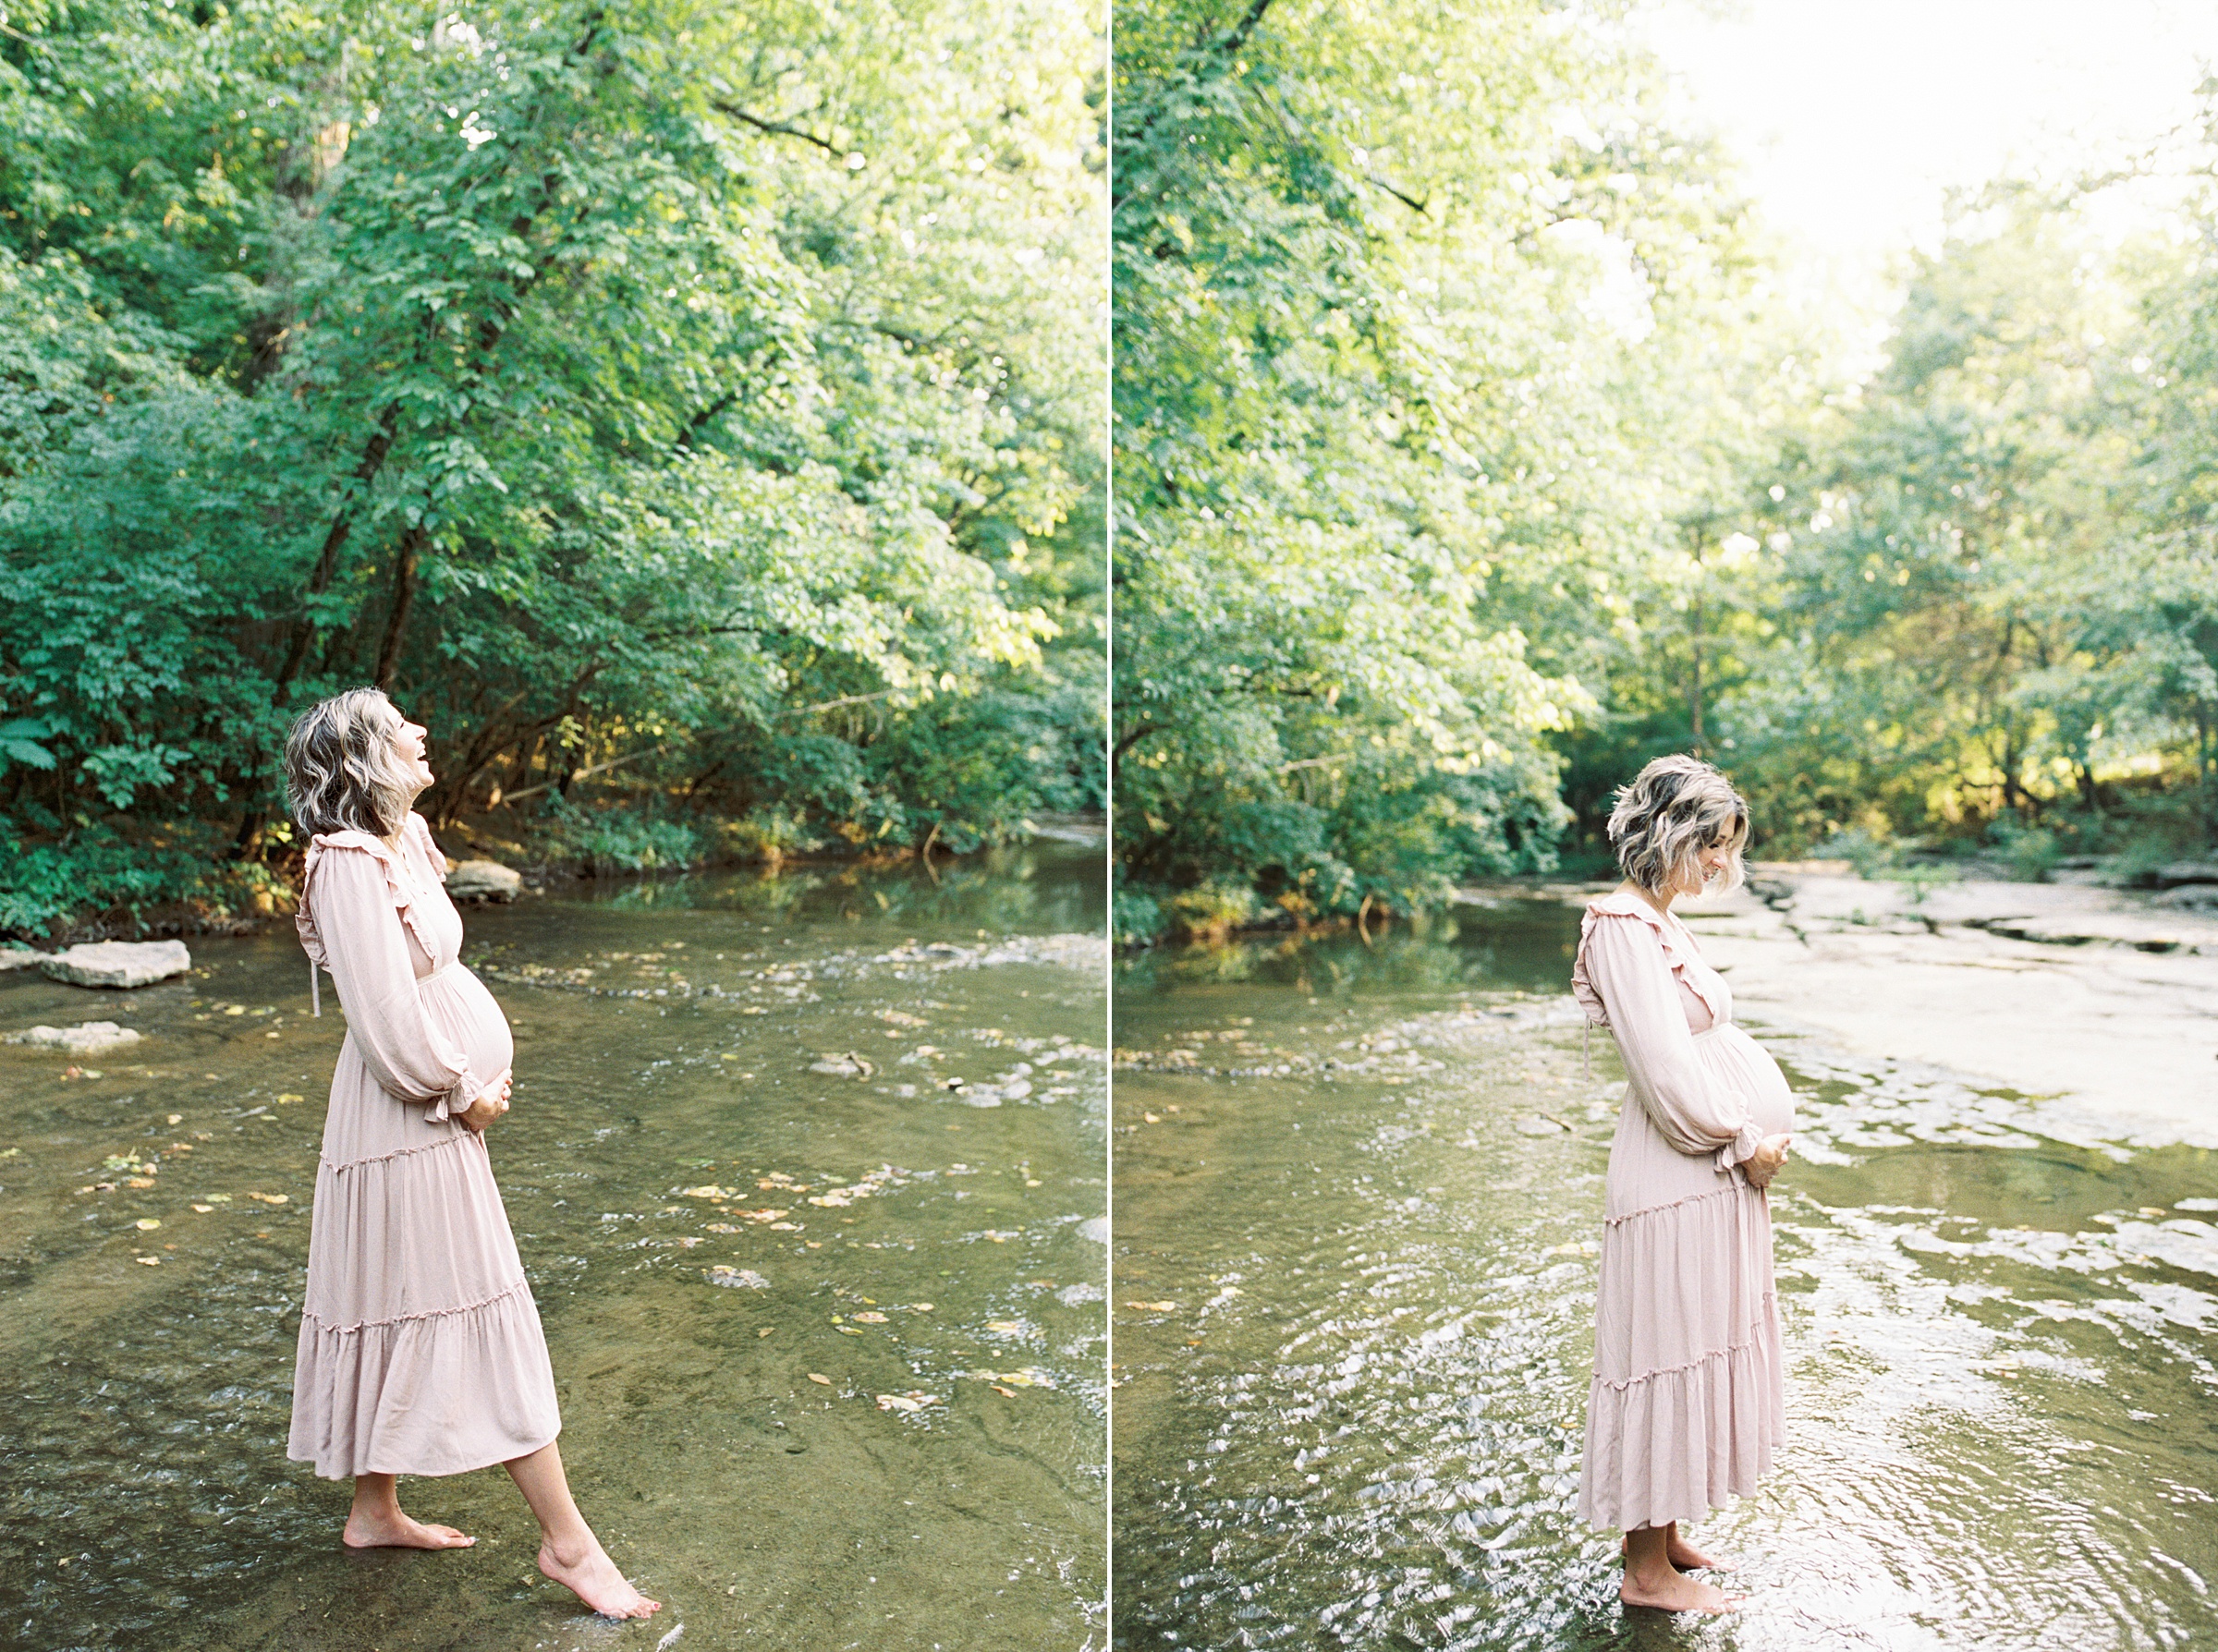 Pregnant woman walks through shallow stream holding baby bump during TN Maternity photos